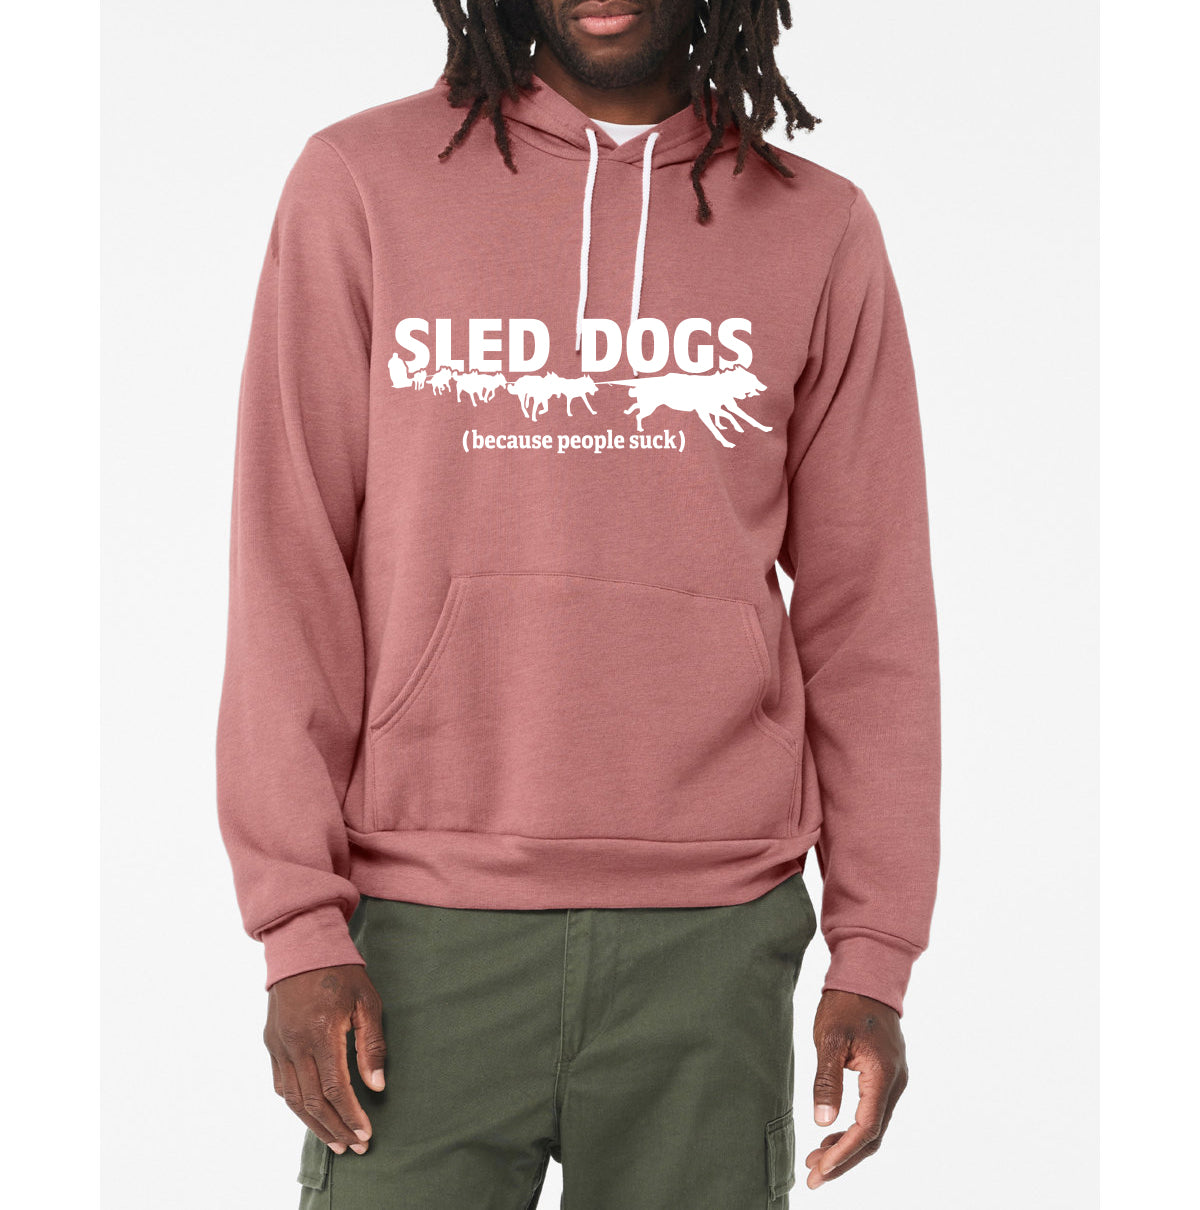 SLED DOGS (because people suck) - Sponge Fleece Hoodie - Siberian Husky - Alaskan Malamute - Sled Dog - Unisex